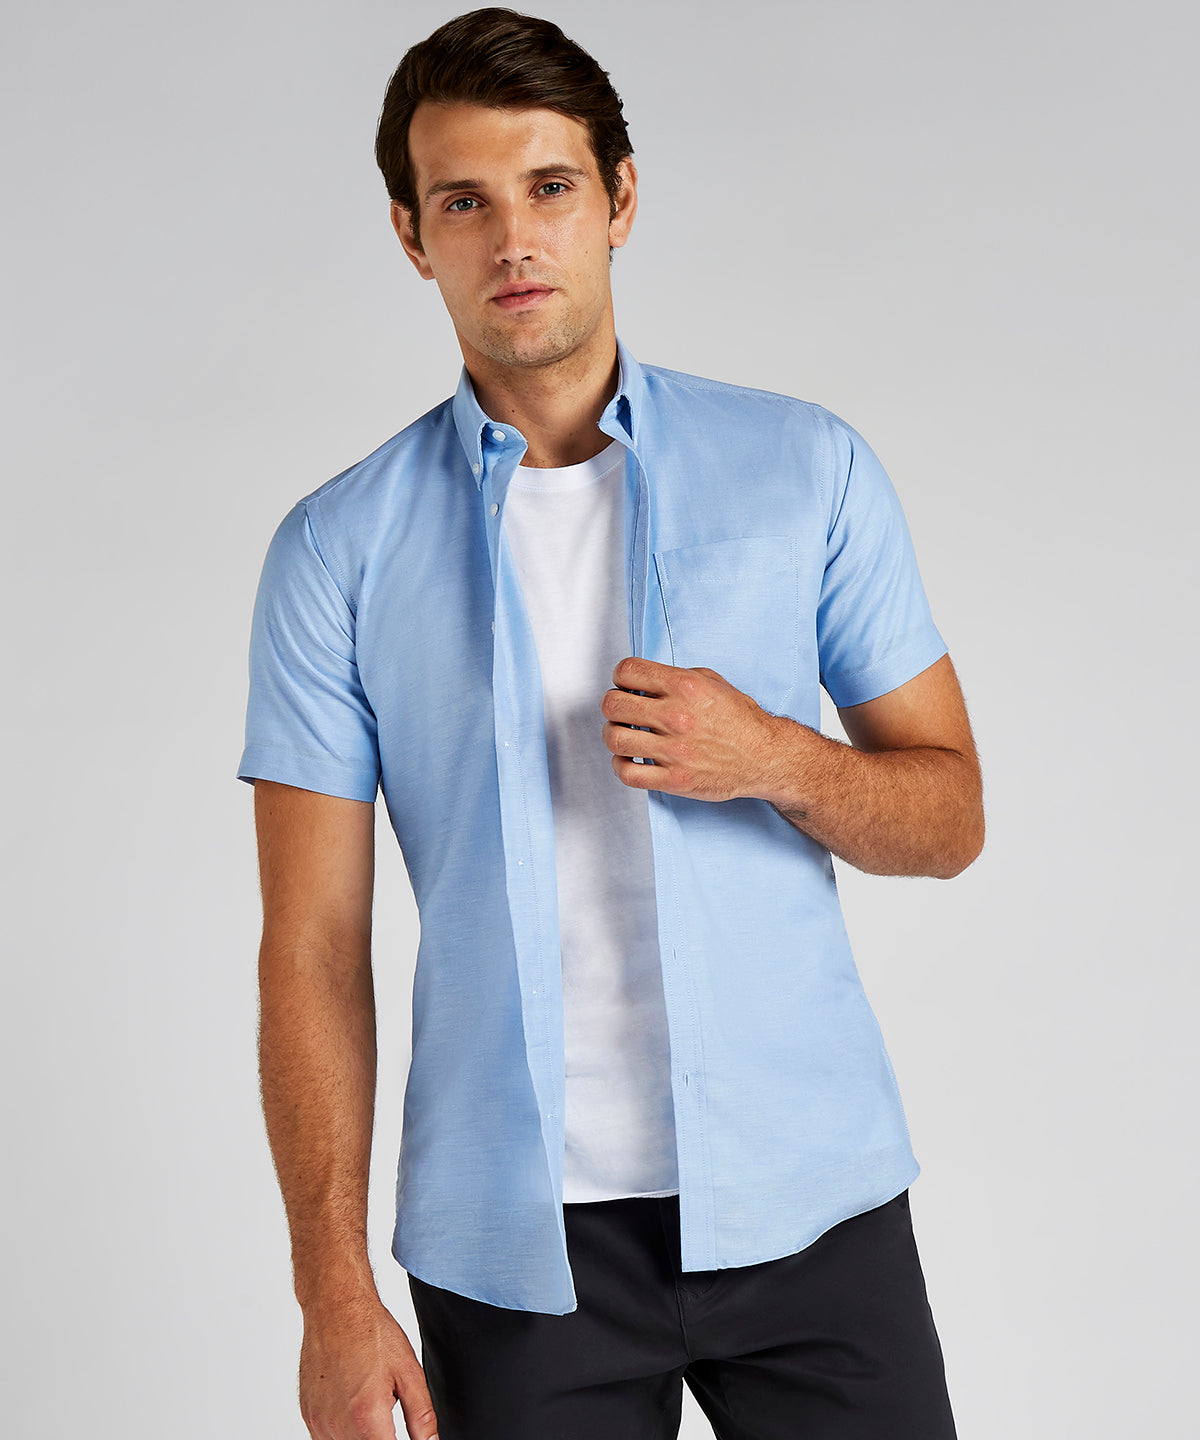 Bolir - Slim Fit Workwear Oxford Shirt Short Sleeve